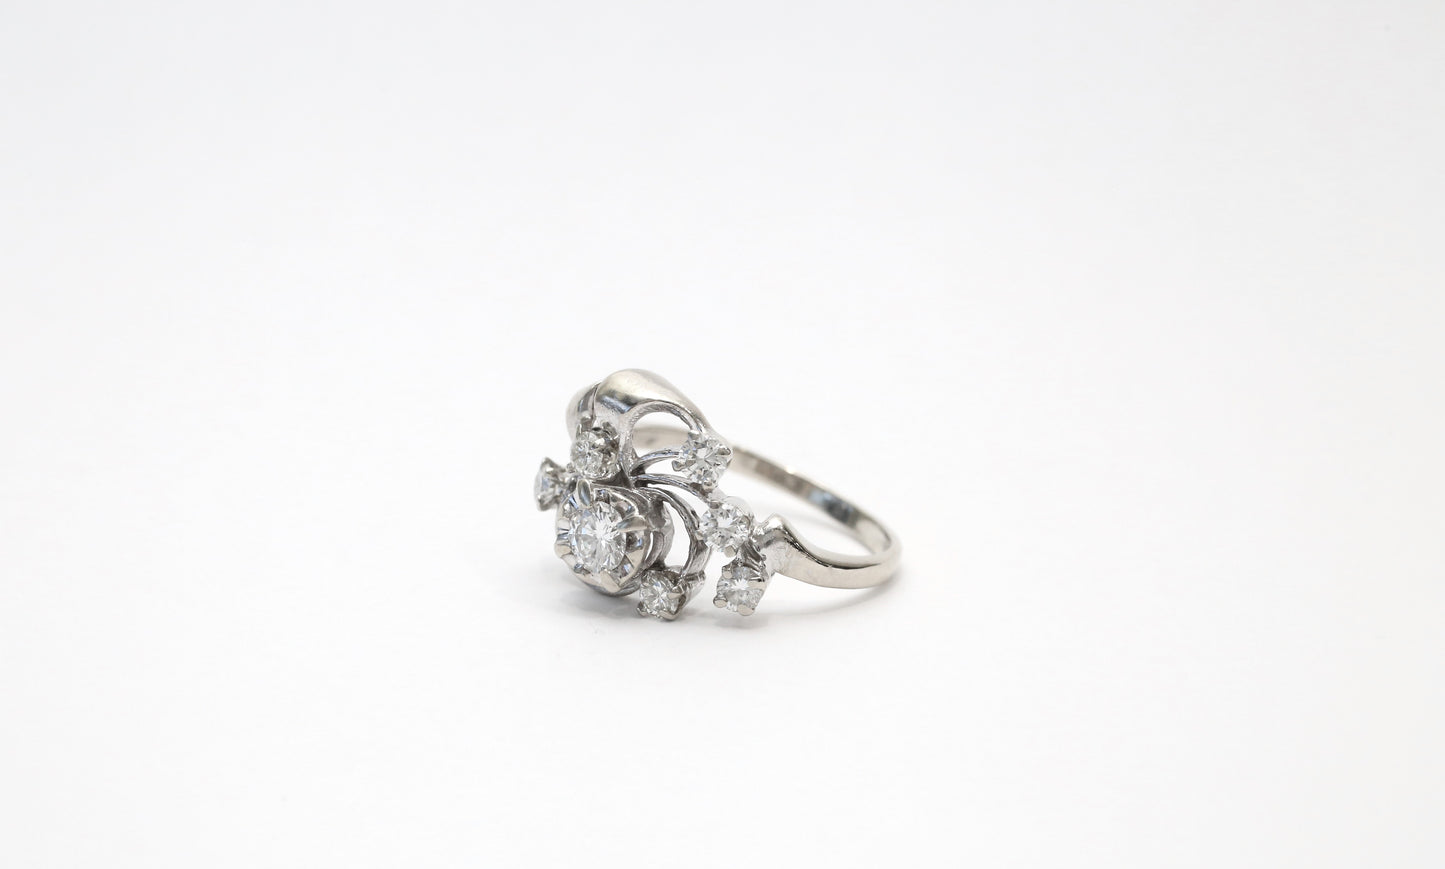 Vintage 14k White Gold Art Deco Diamond Ring, Size 7 - 4.0g